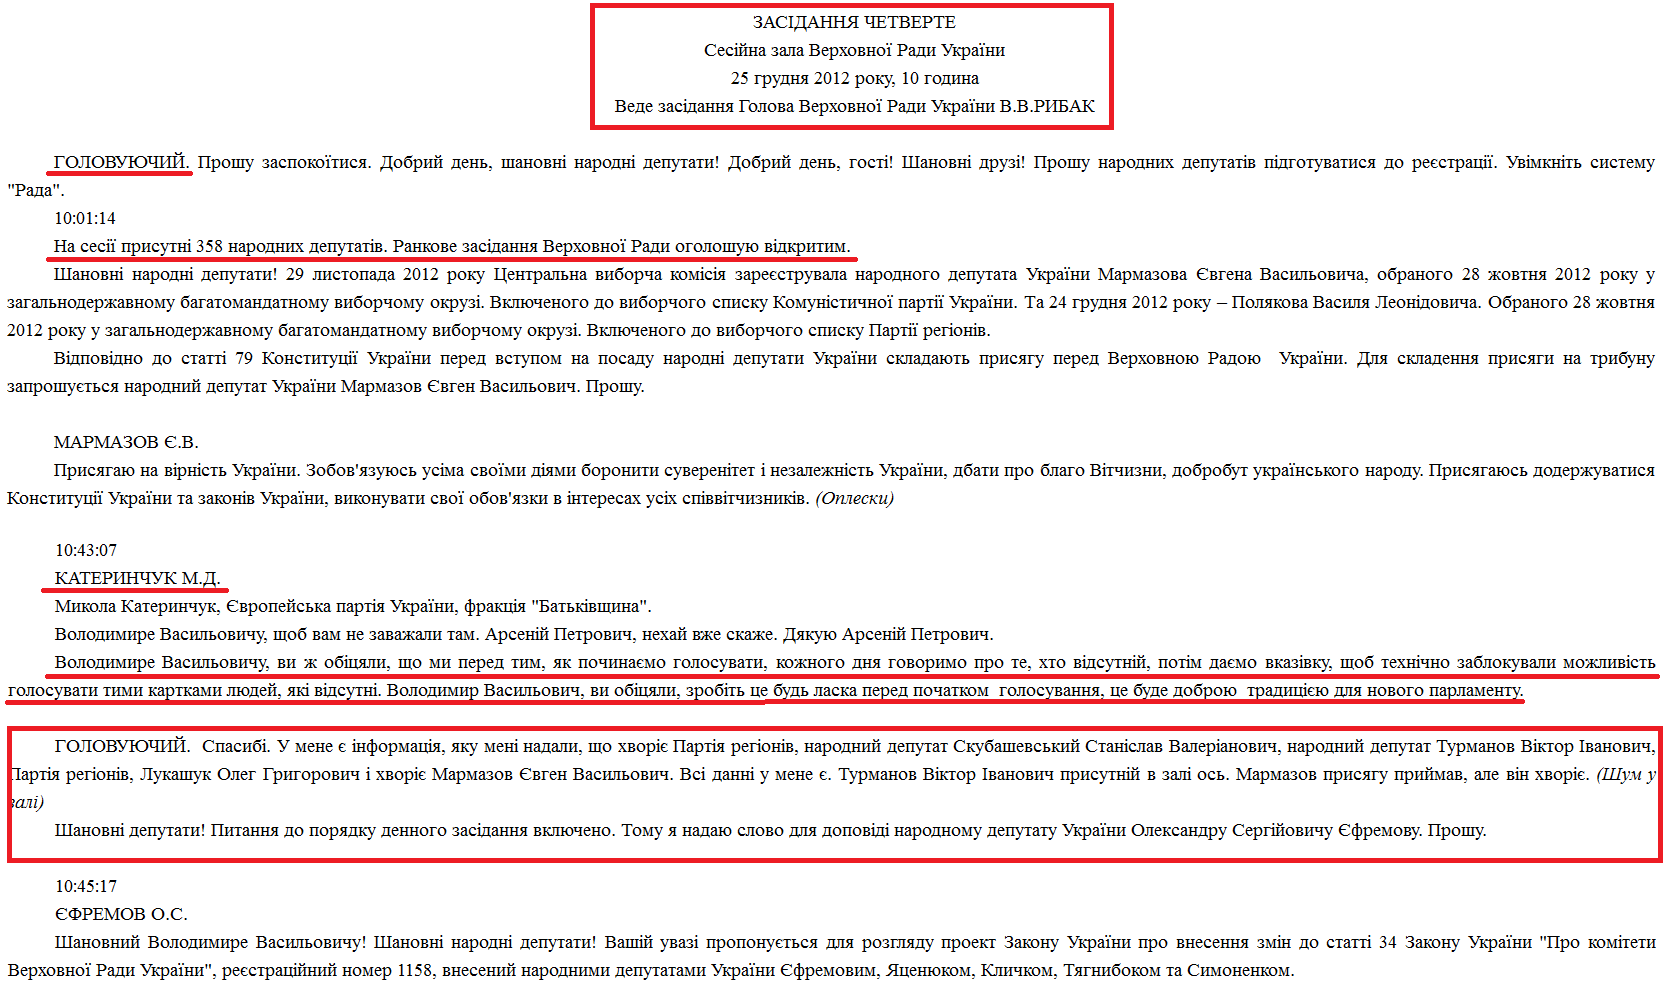 http://static.rada.gov.ua/zakon/skl7/1session/STENOGR/25121207_04.htm